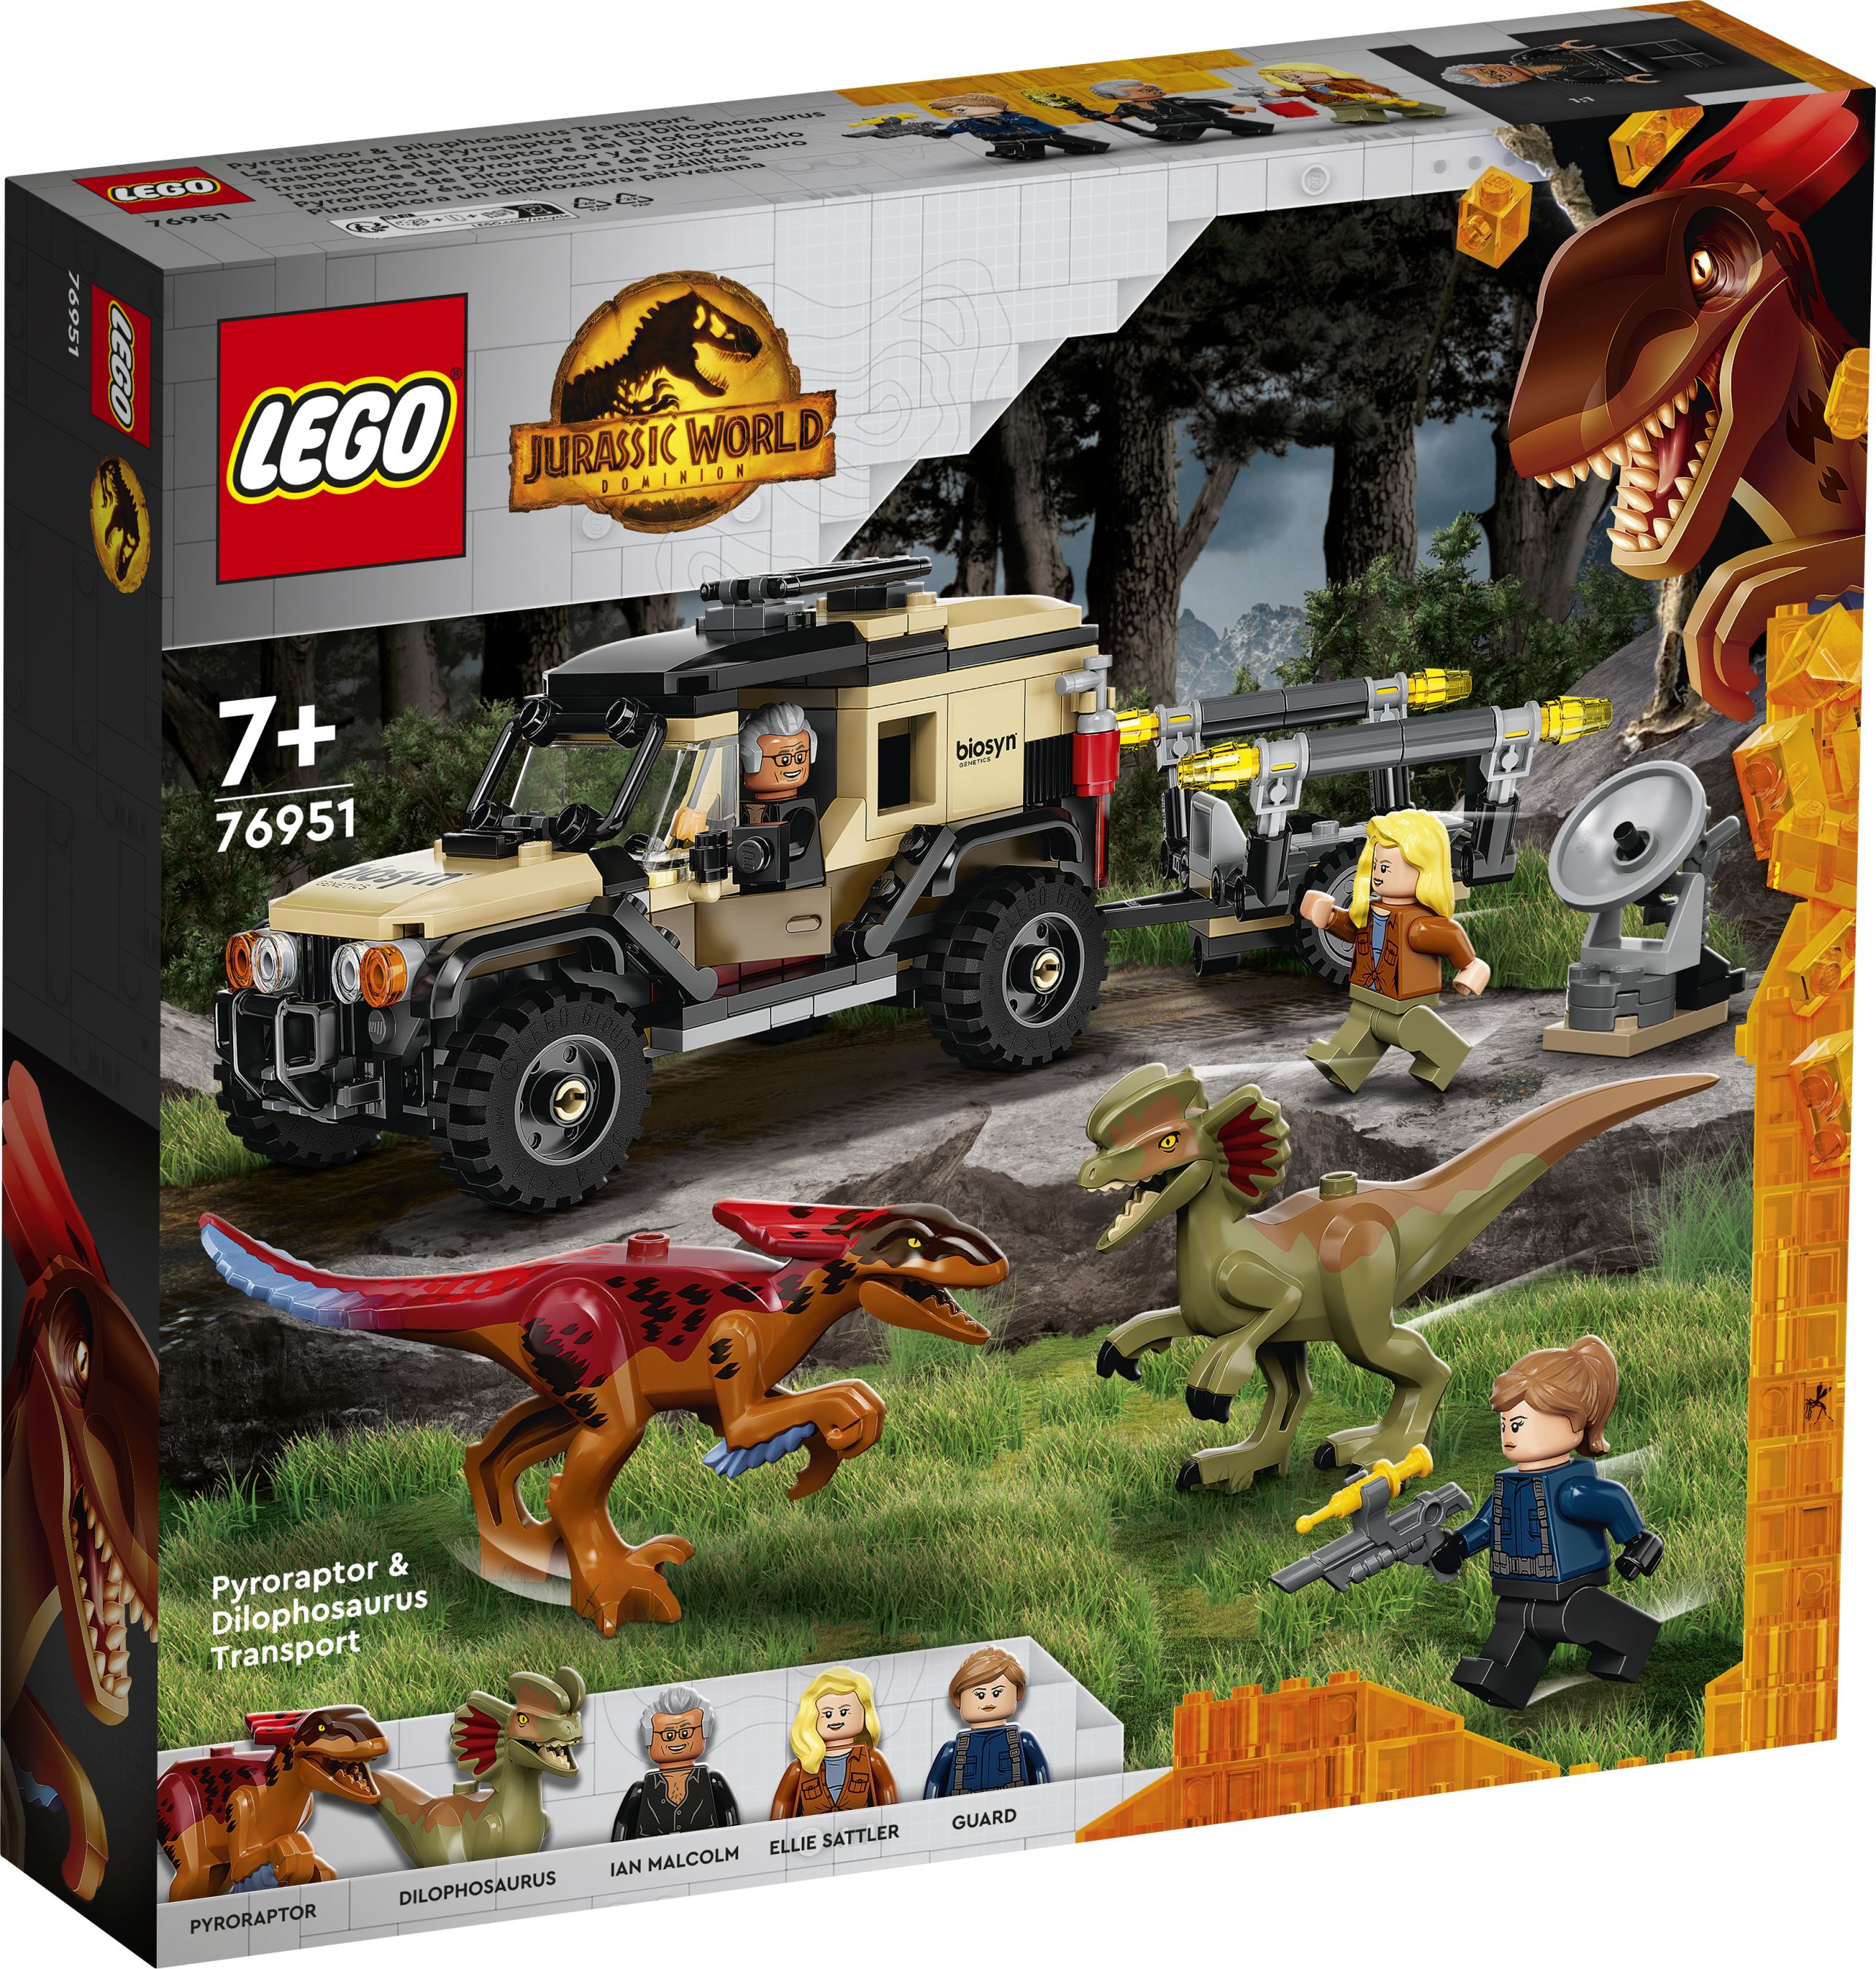 LEGO Jurassic World 76951 Pyroraptor & Dilophosaurus Transport LEGO_76951_Box1_V29.jpg